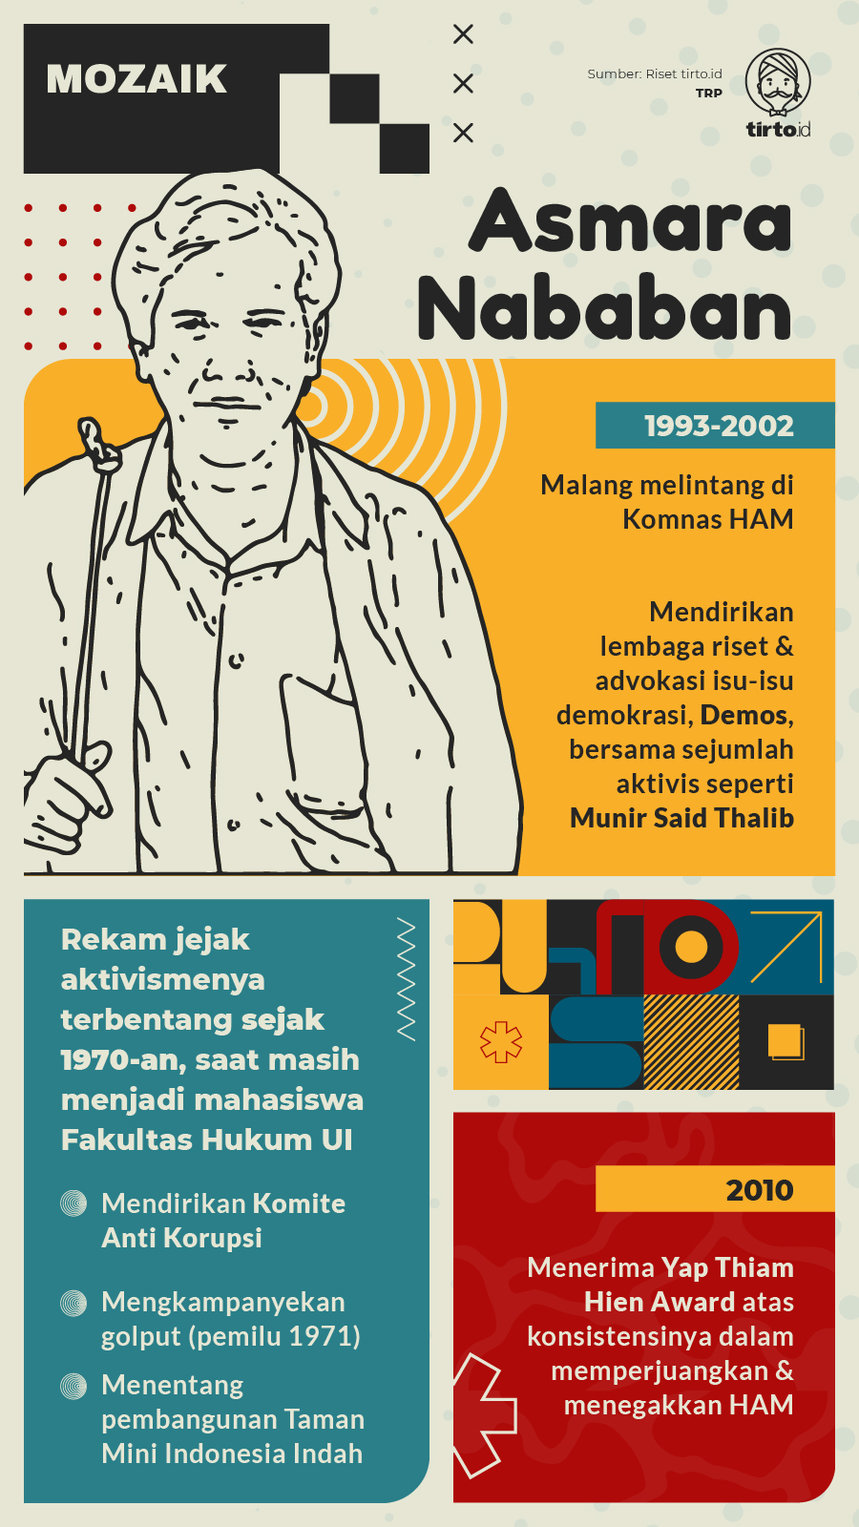 Infografik Mozaik Asmara Nababan